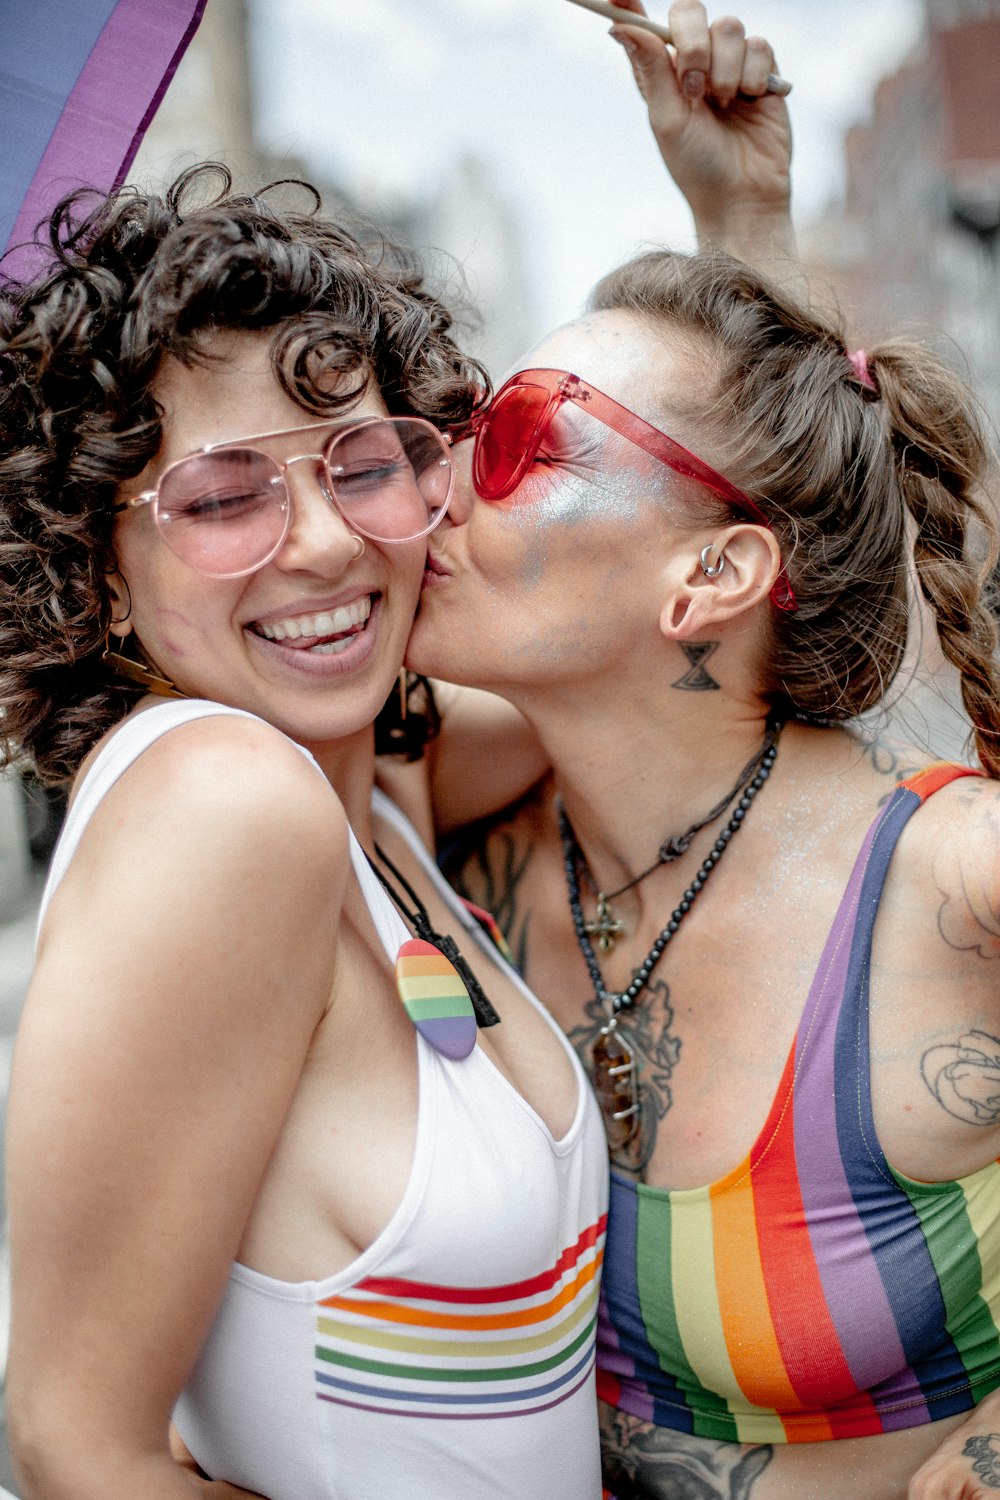 500+ Lesbian Girl Pictures | Download Free Images on Unsplash